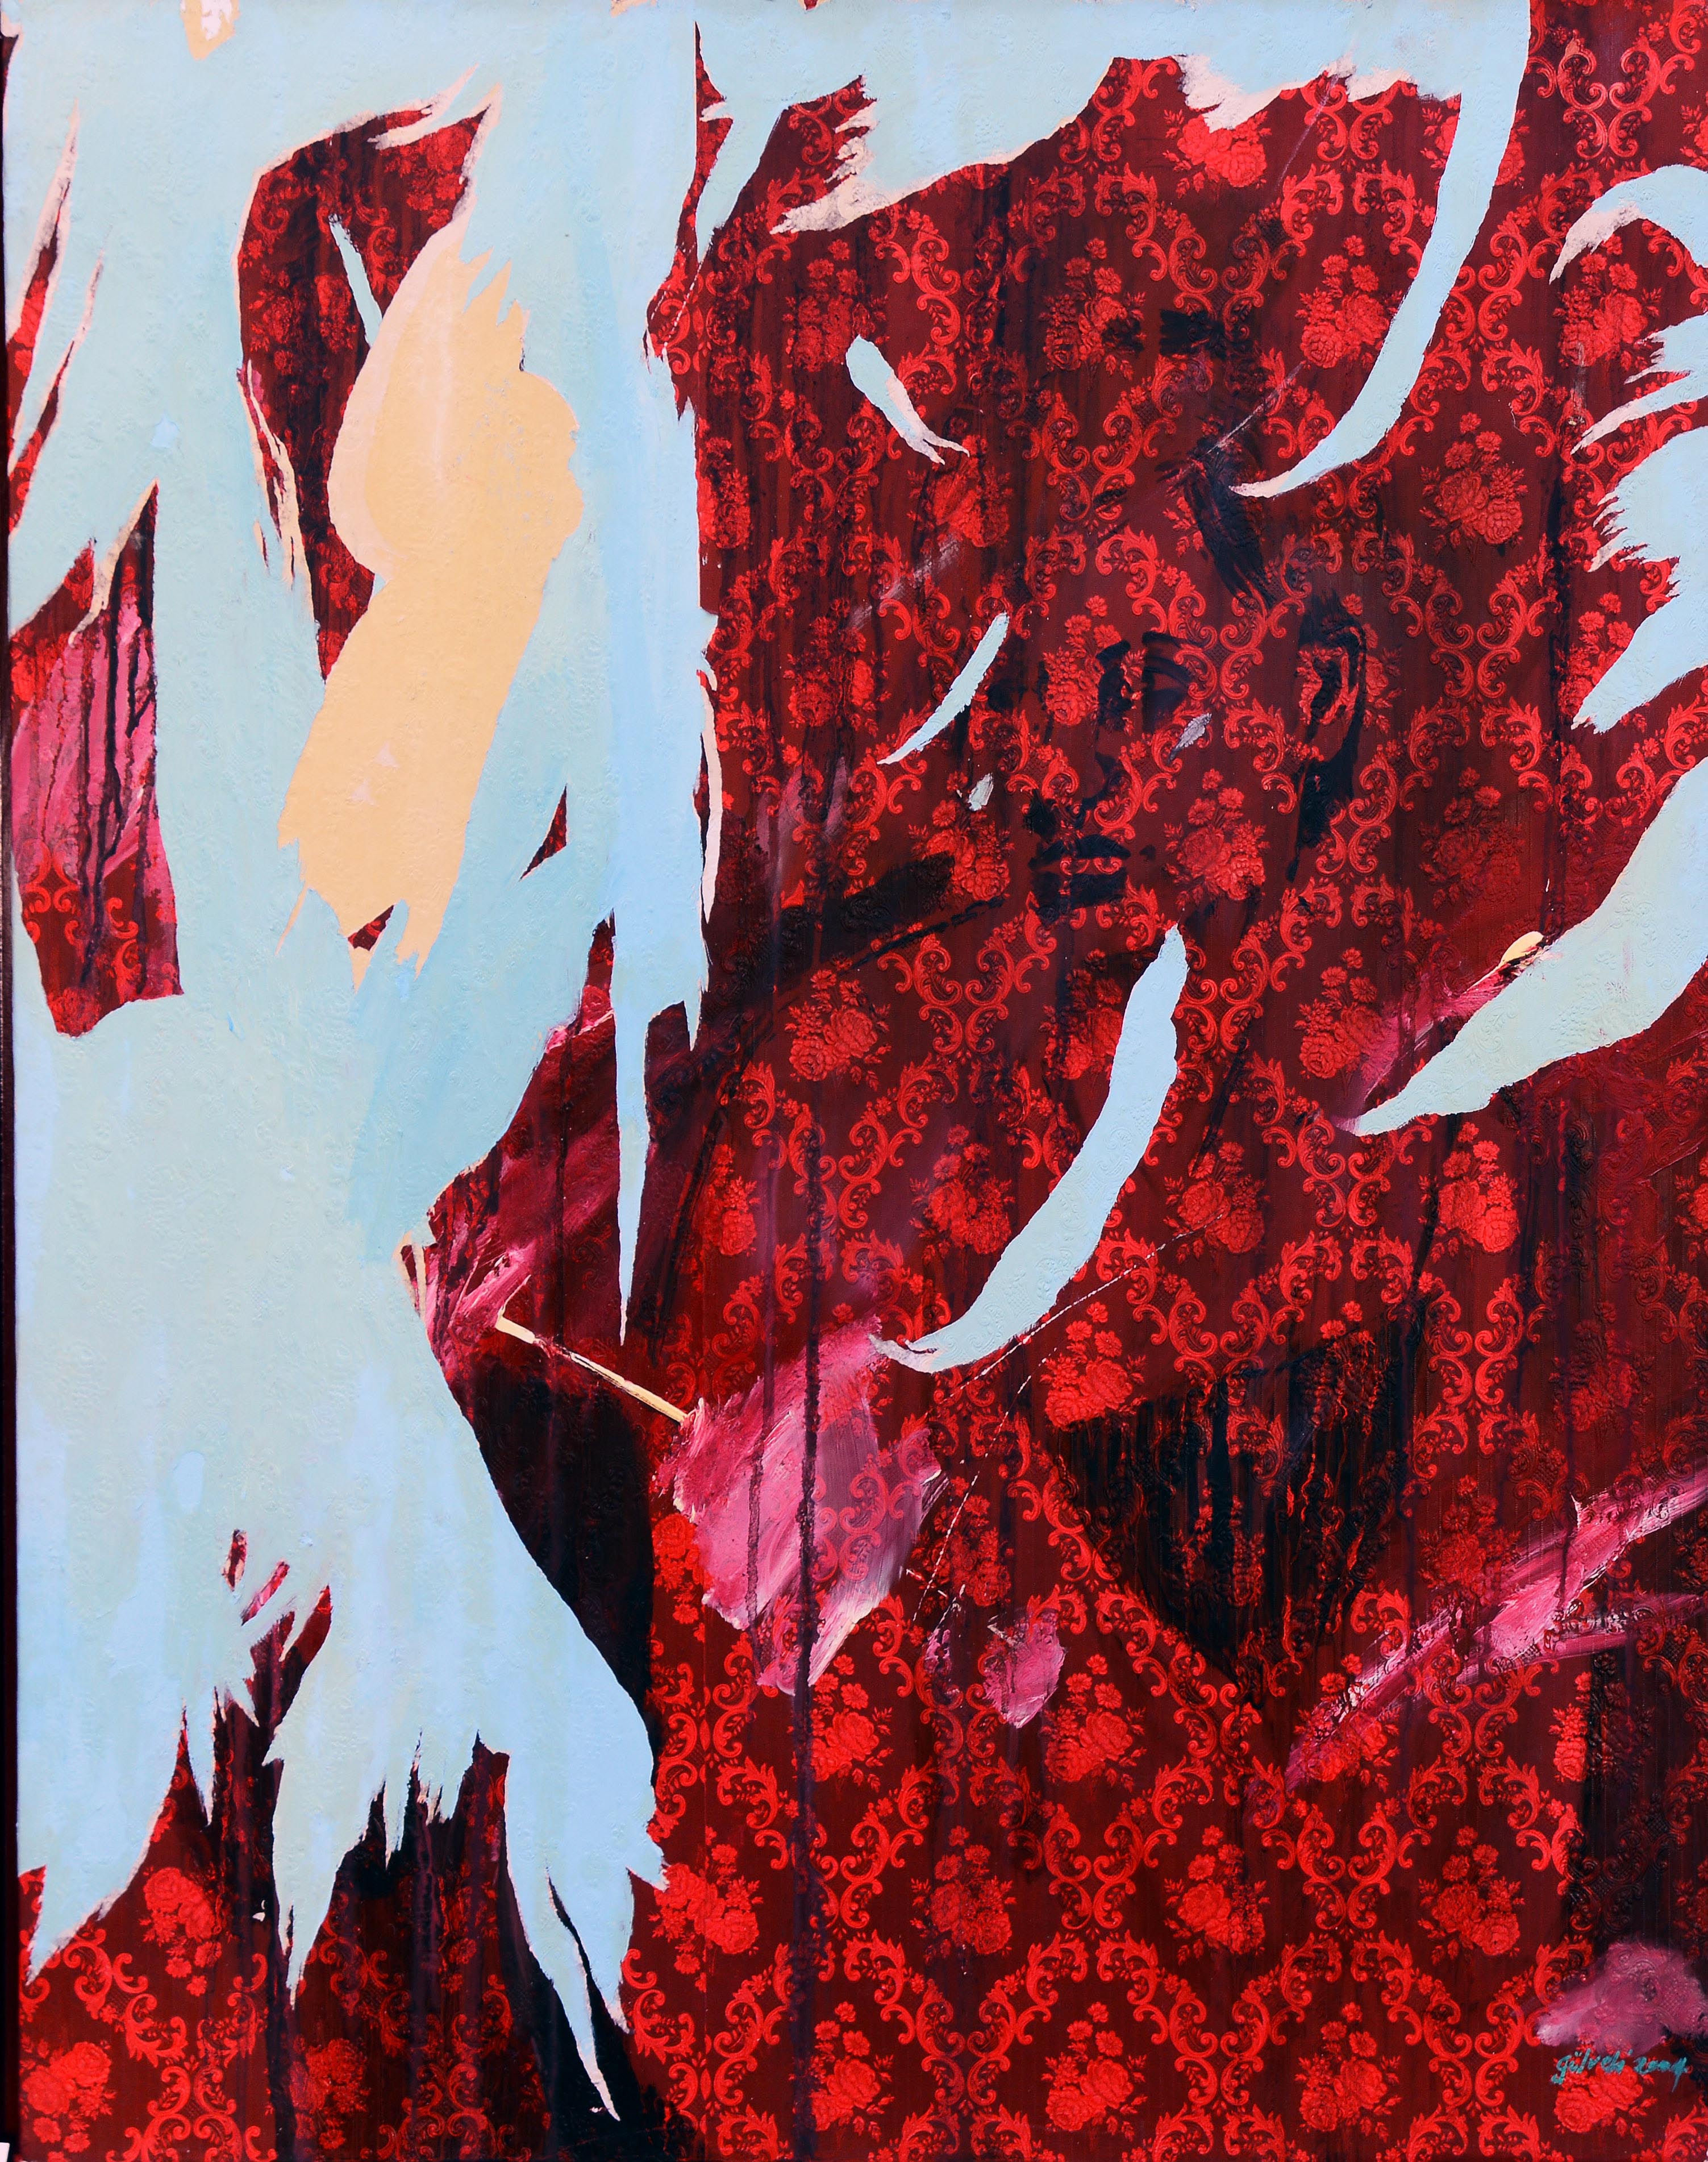 2004, Tuval üzerine karışık teknik- Mixed media on canvas, 110×90 cm